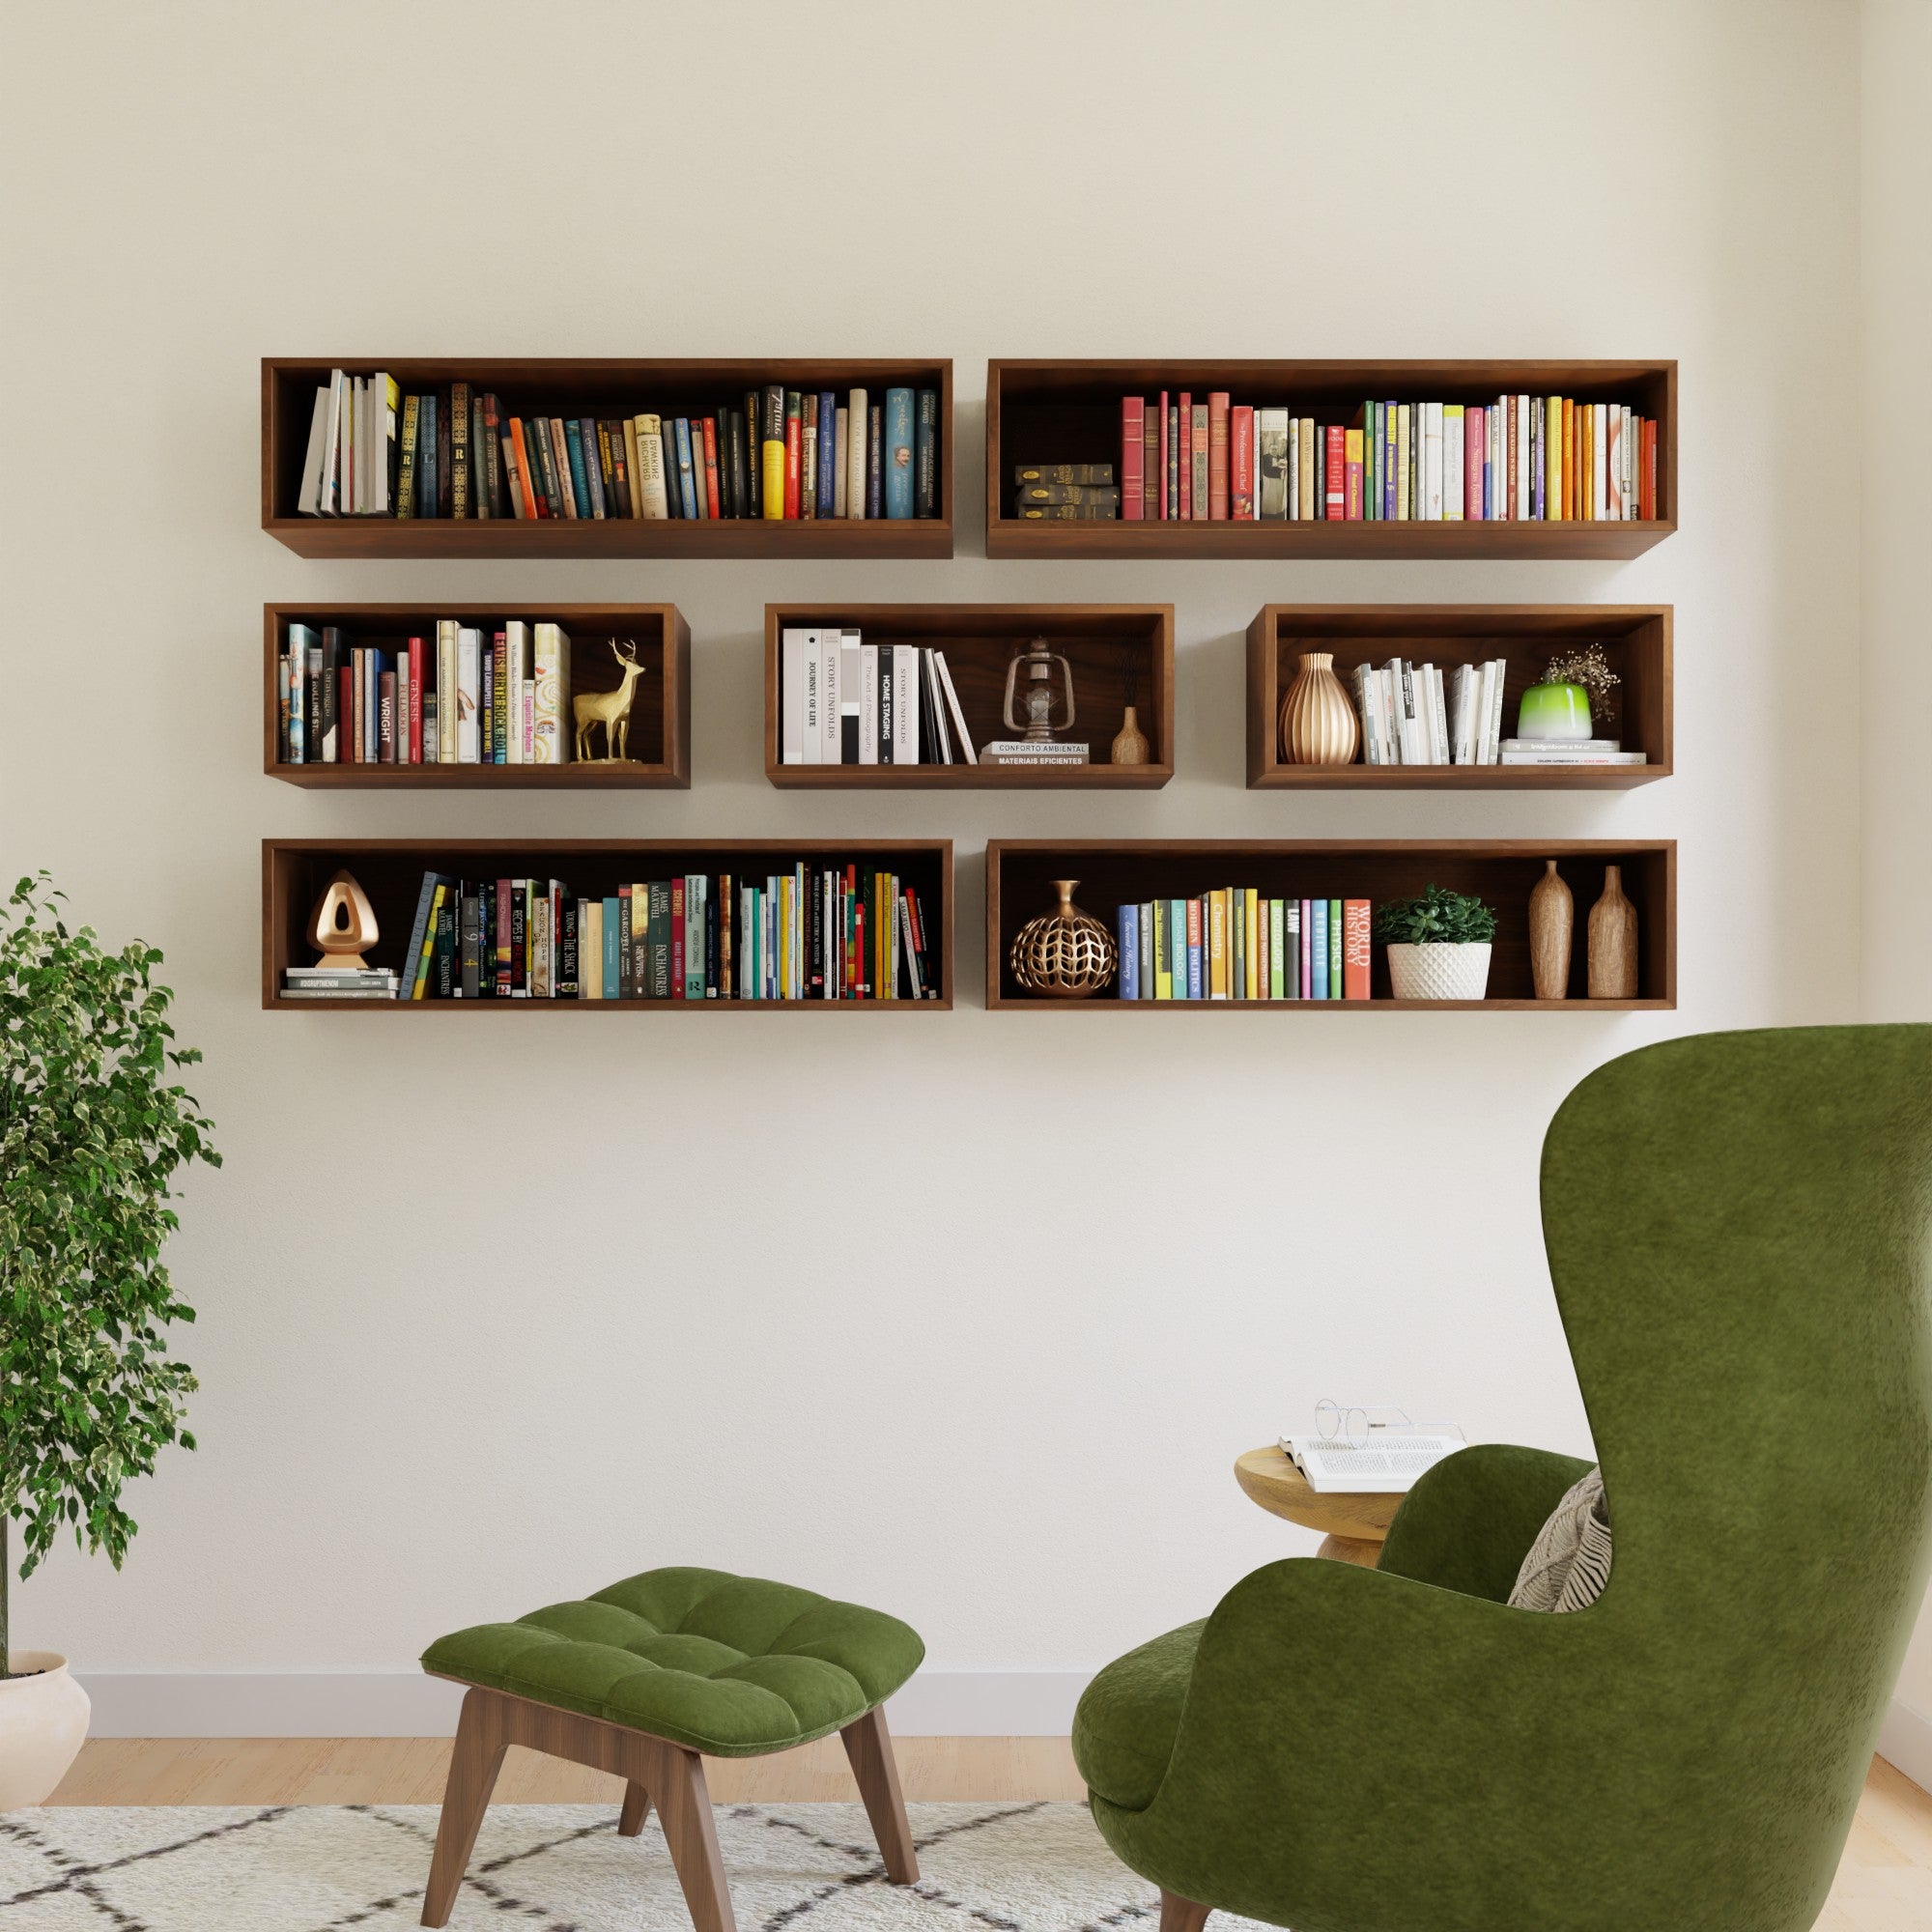 Simple Bookcase, Cherry & Walnut Wood